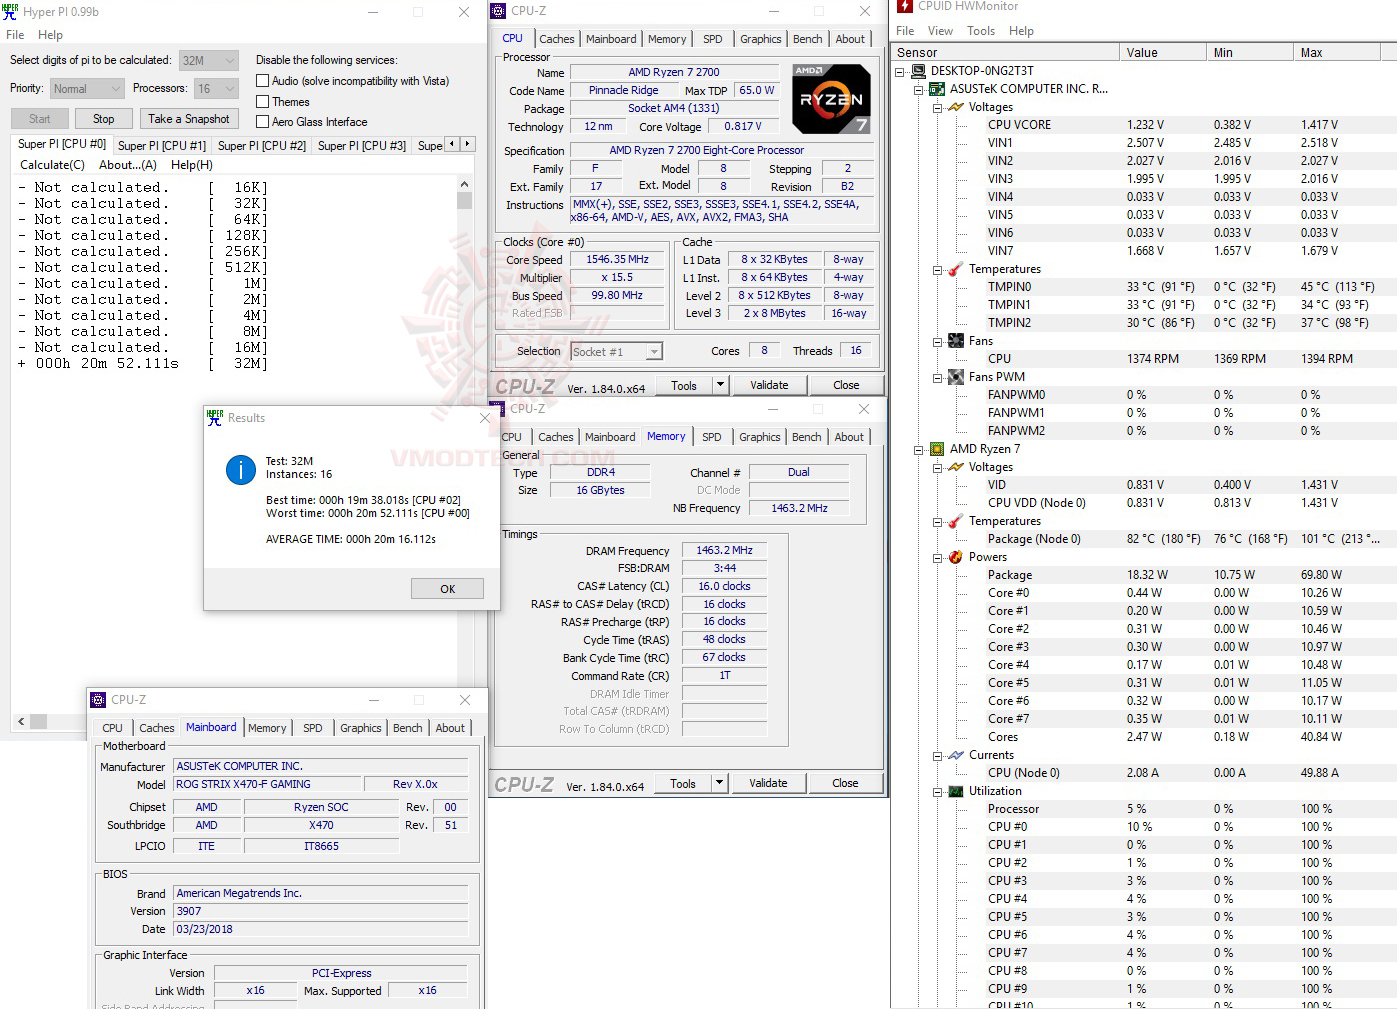 h32 AMD RYZEN 7 2700 PROCESSOR REVIEW 